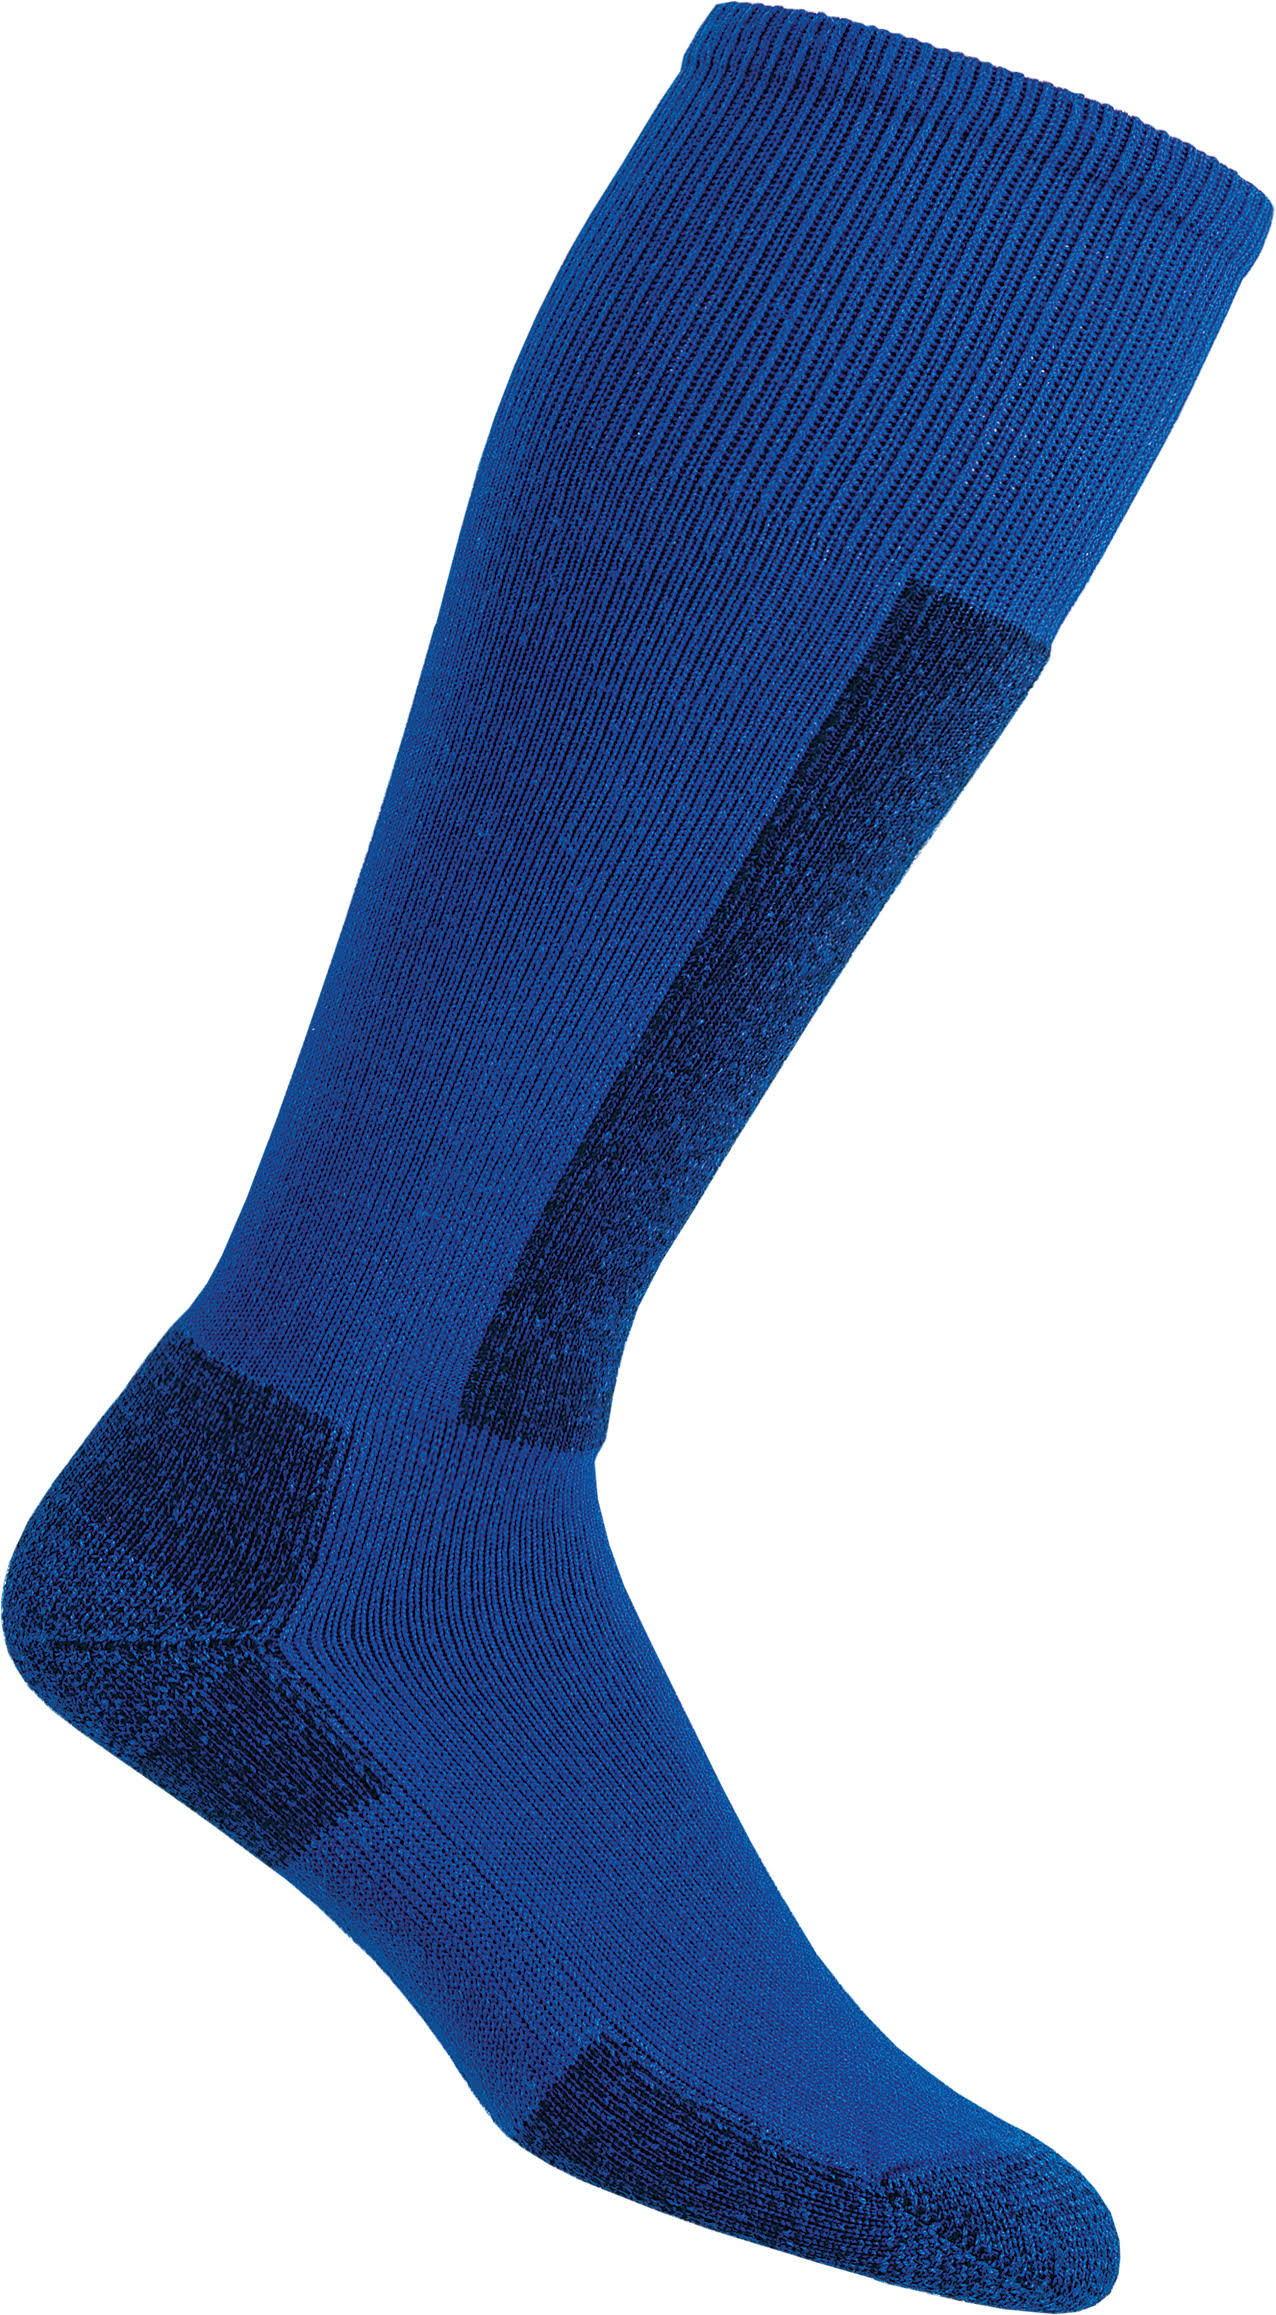 Thorlo Fully Padded Ski Socks - Blue - UK 2.5-4.5